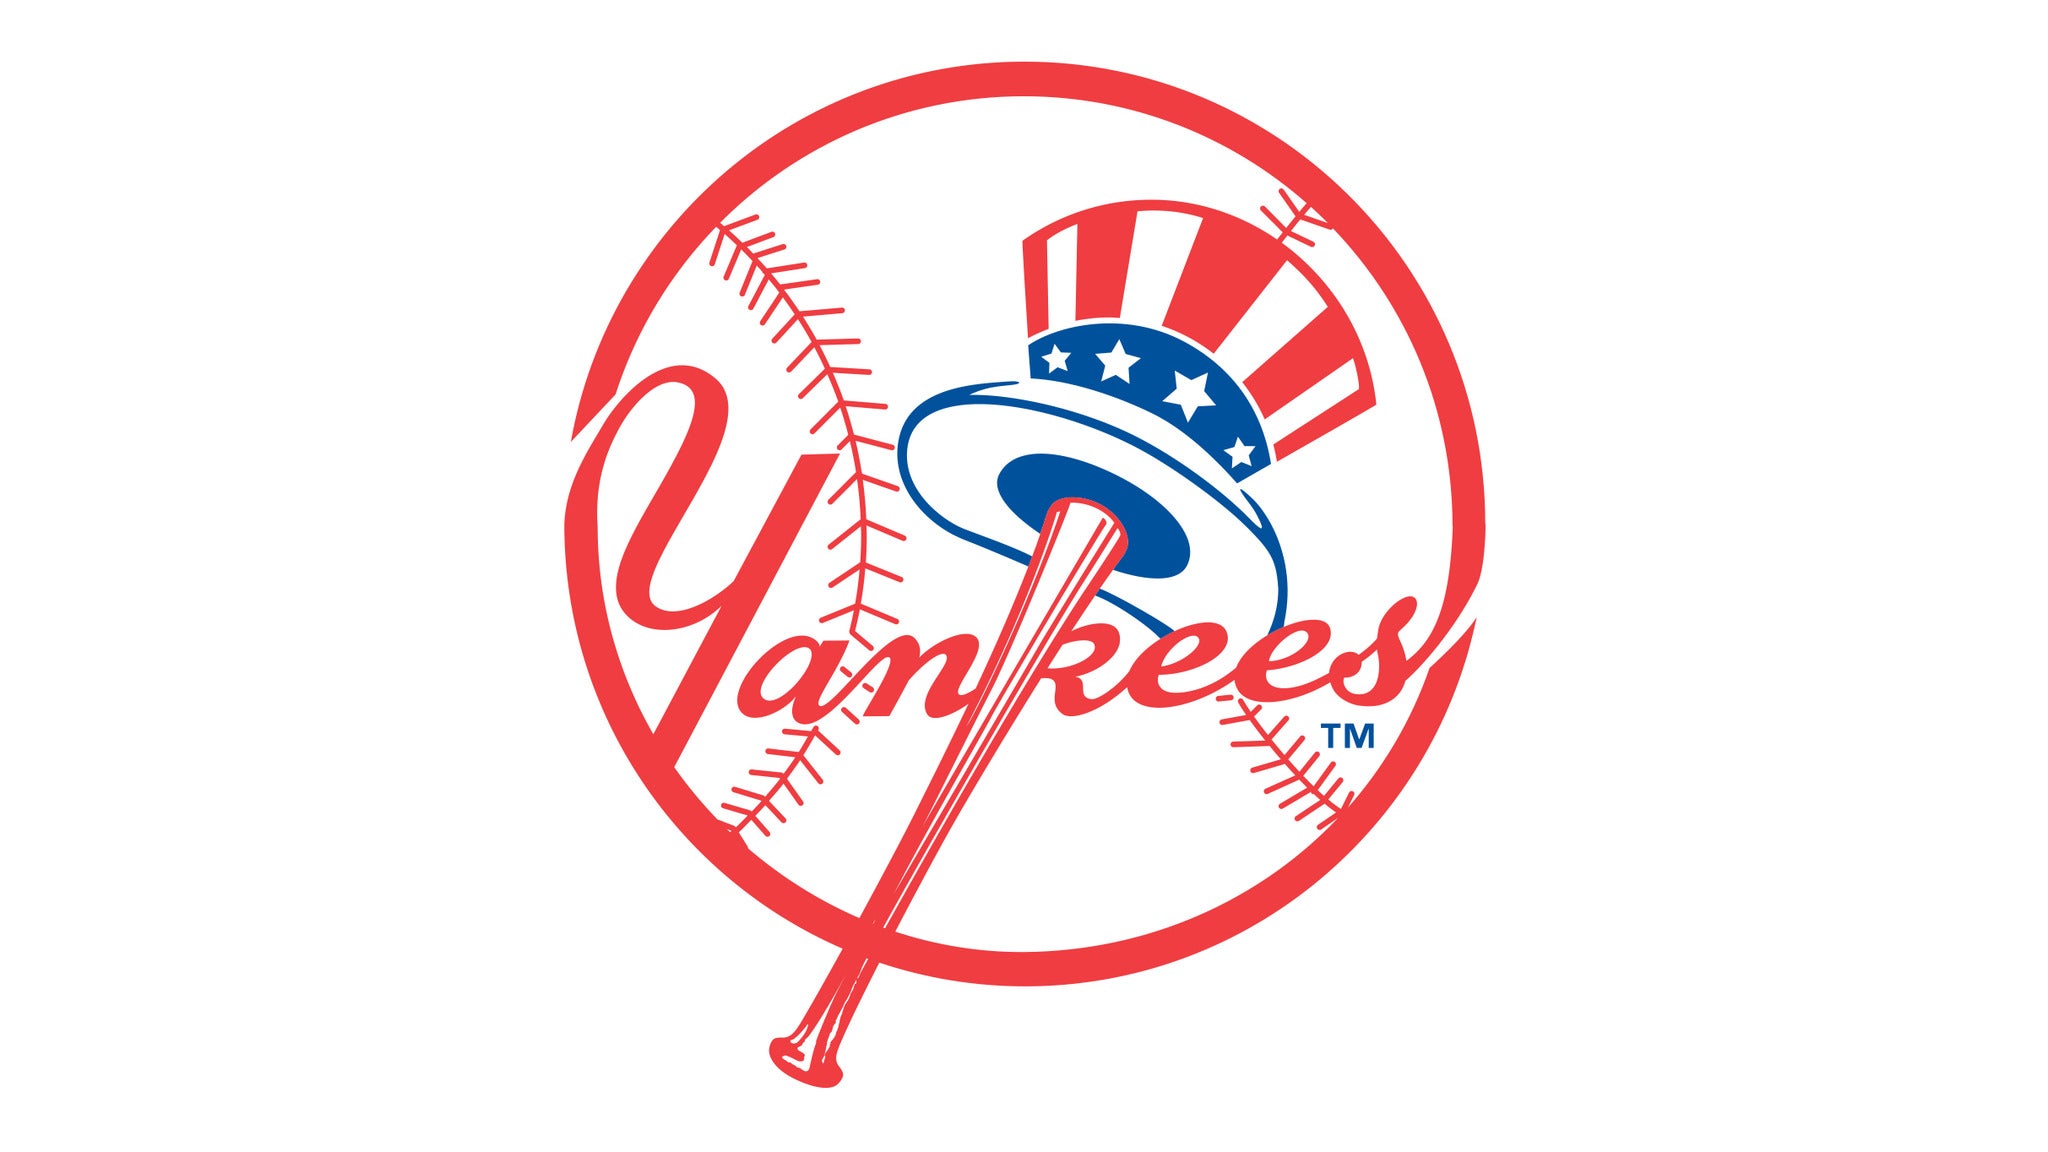 New York Yankees v. Los Angeles Angels